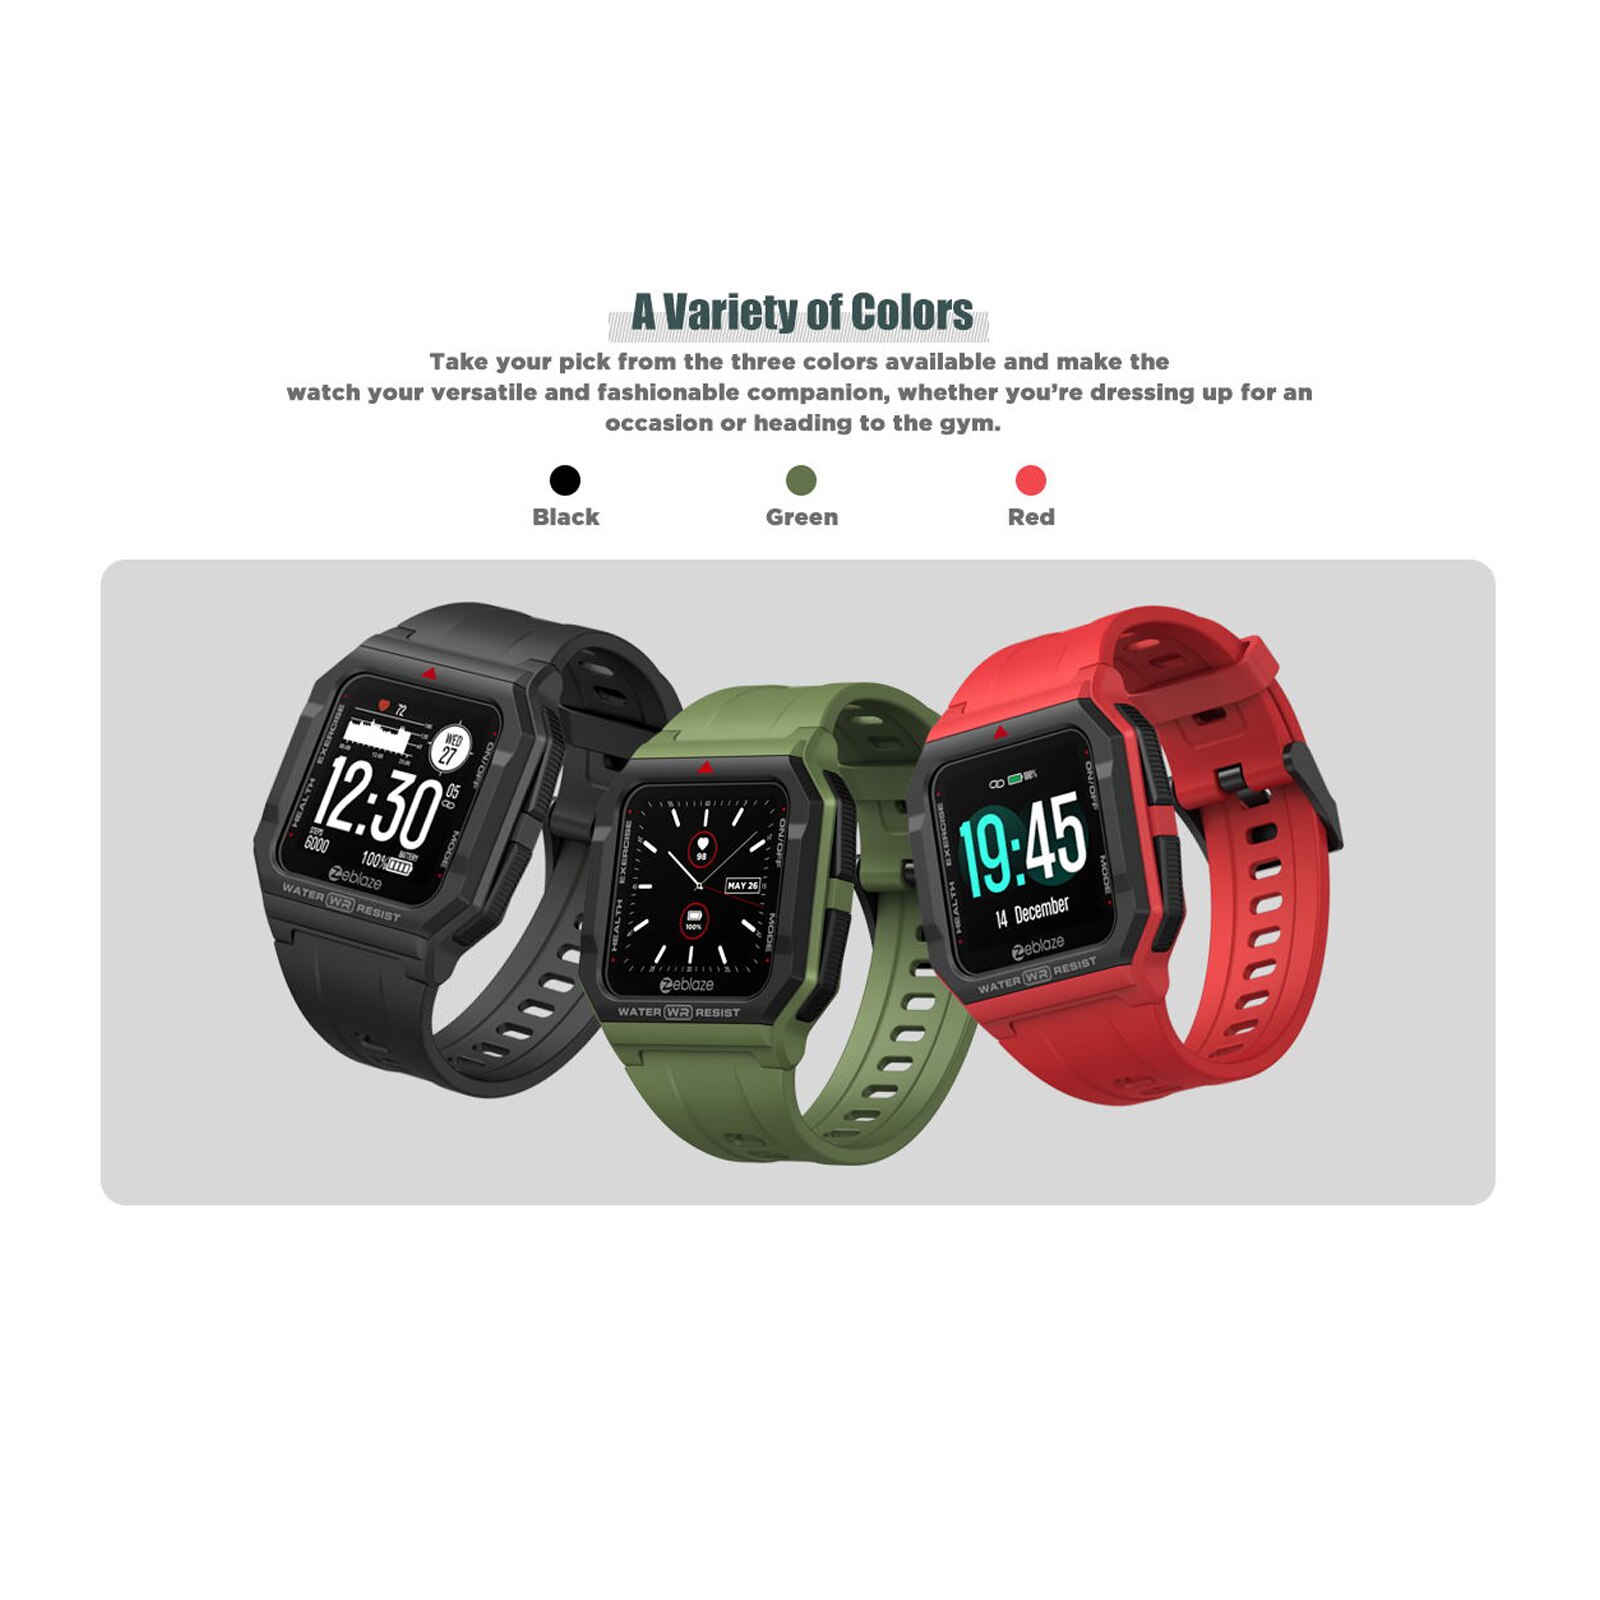 Zeblaze Ares Retro Smart Watch Man Women's Smartwatches Wristwatch Heart Rate Blood Pressure 13 Sports Modes Smart Watch